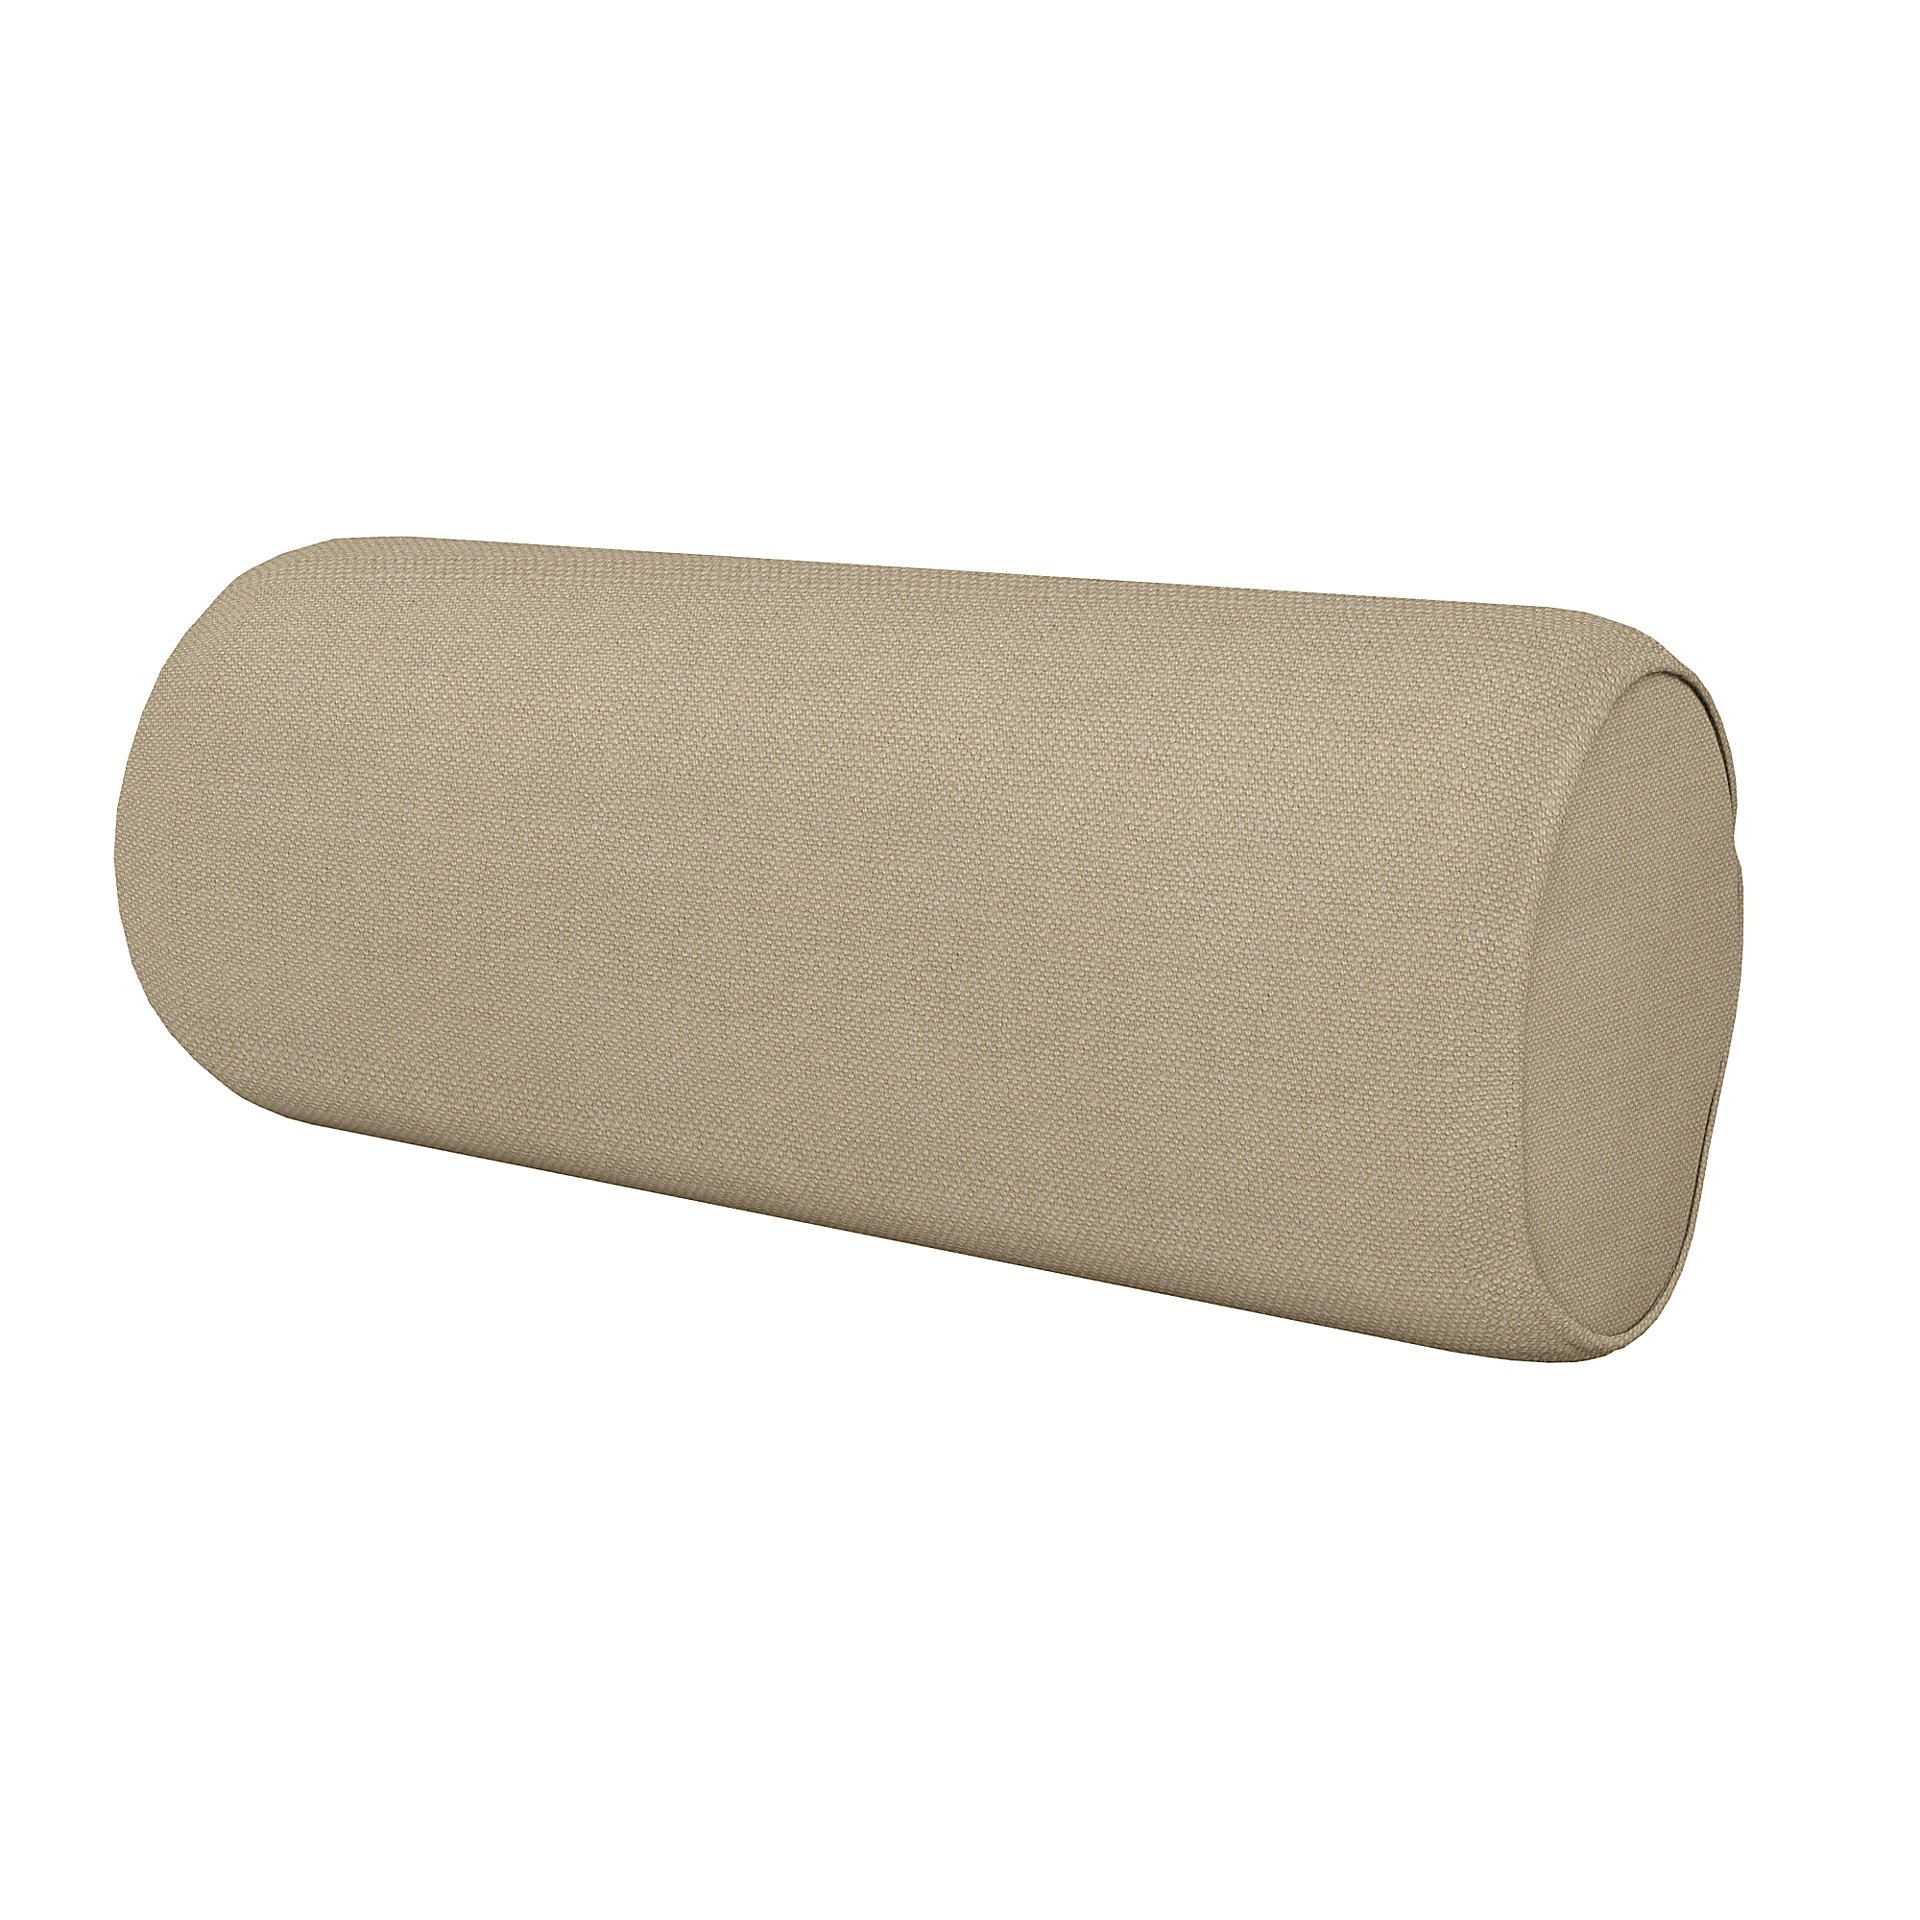 IKEA - Cushion Cover Ektorp Roll , Tan, Linen - Bemz